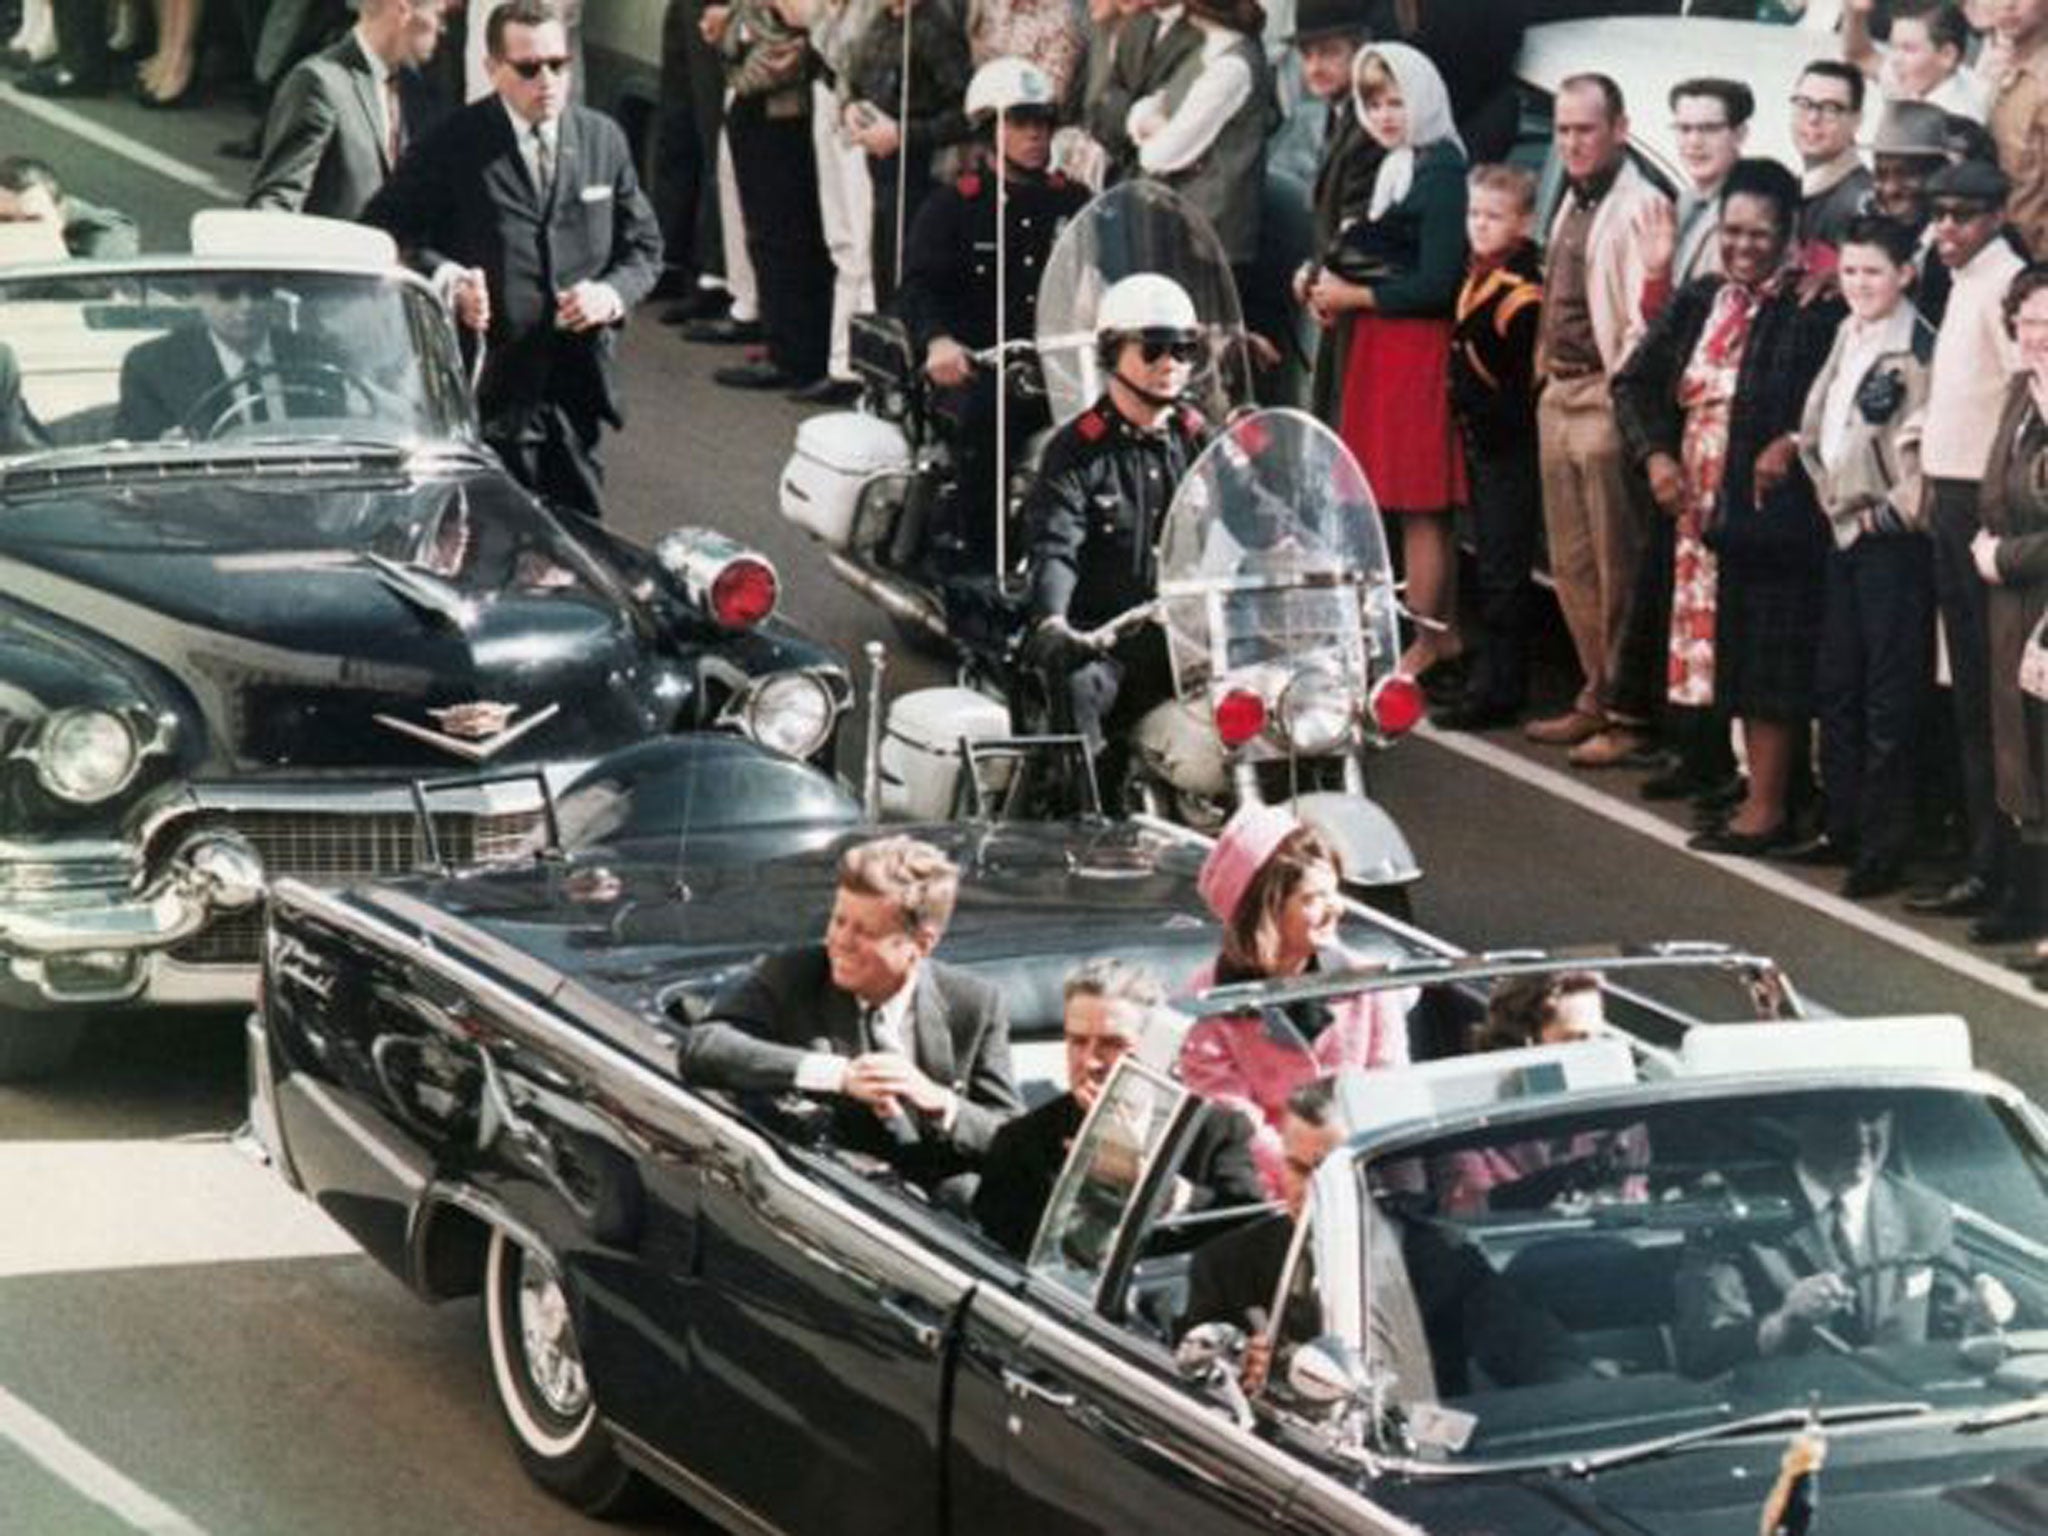 President John F. Kennedy's motorcade travels through Dallas on 22 November 1963